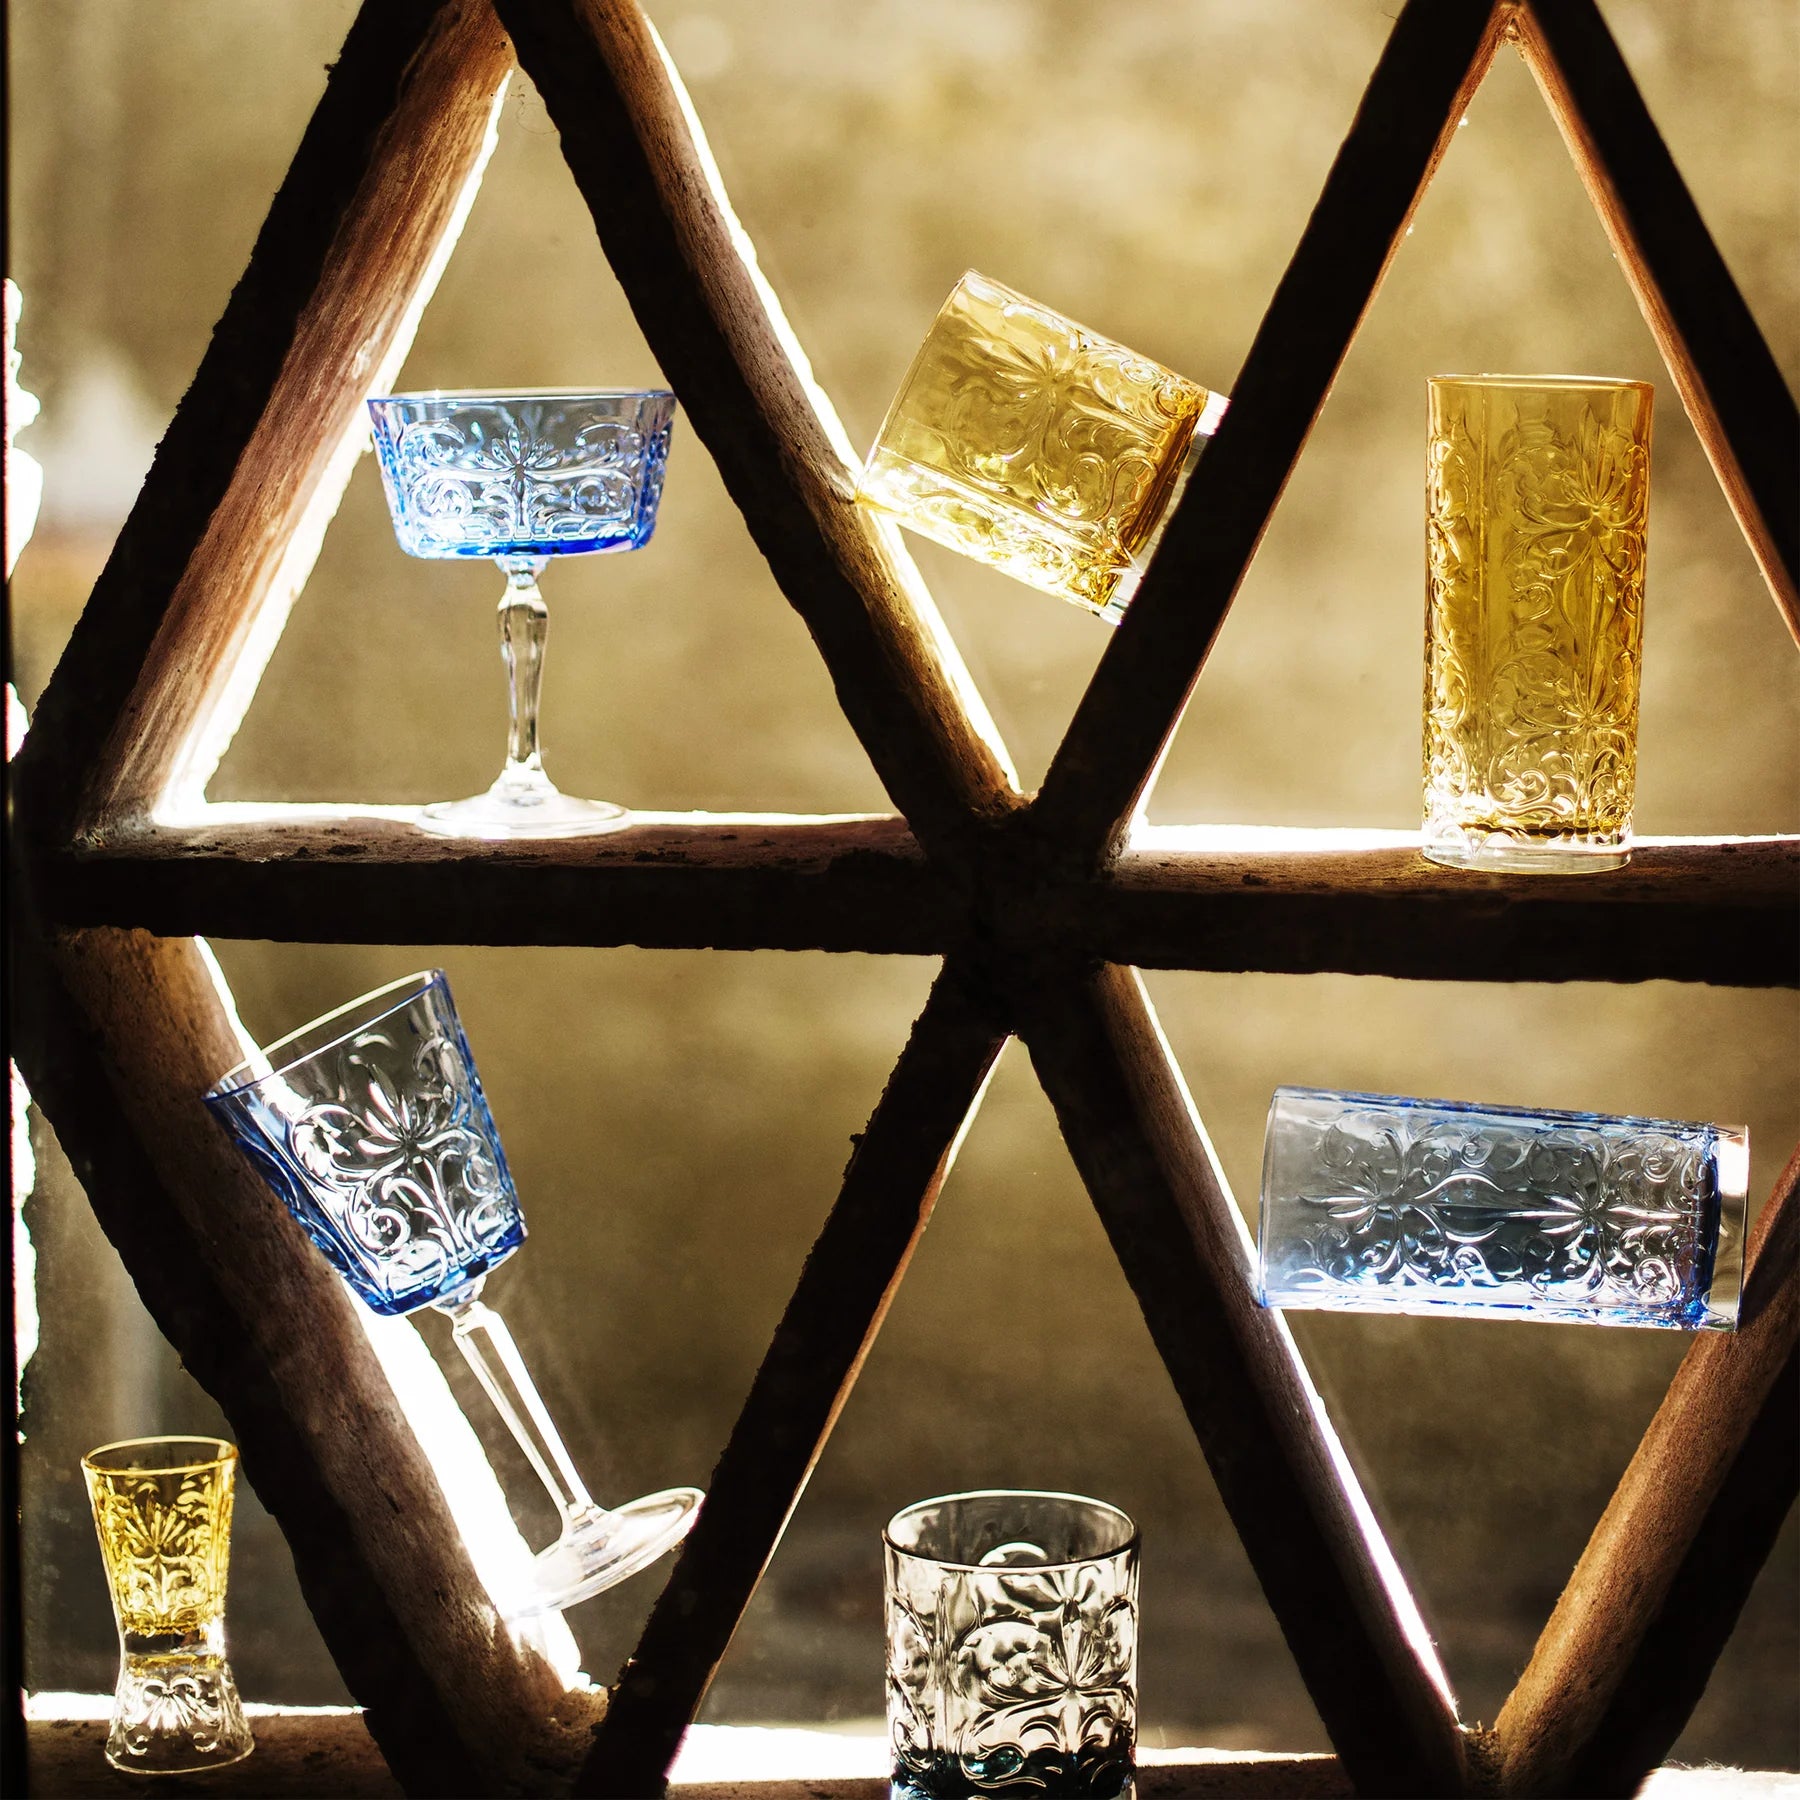 Barocco Cobalt Coupe Champagne Glass